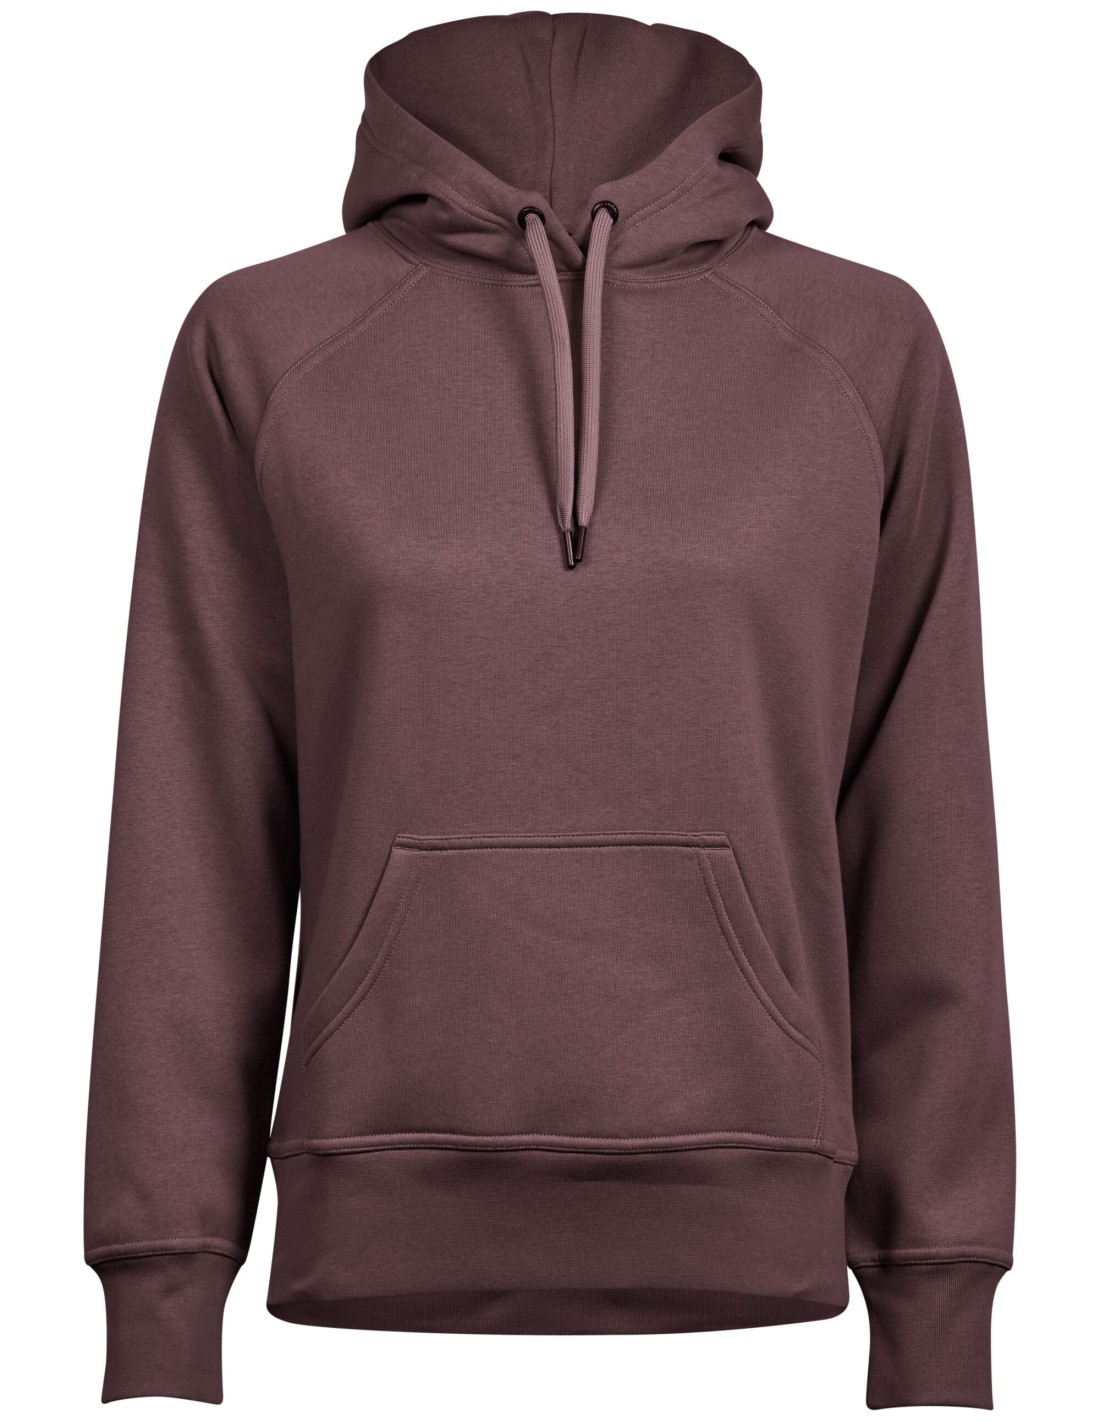 Tee Jays Ladies Hooded Sweatshirt - TJ5431 - Size: Small to 2XL